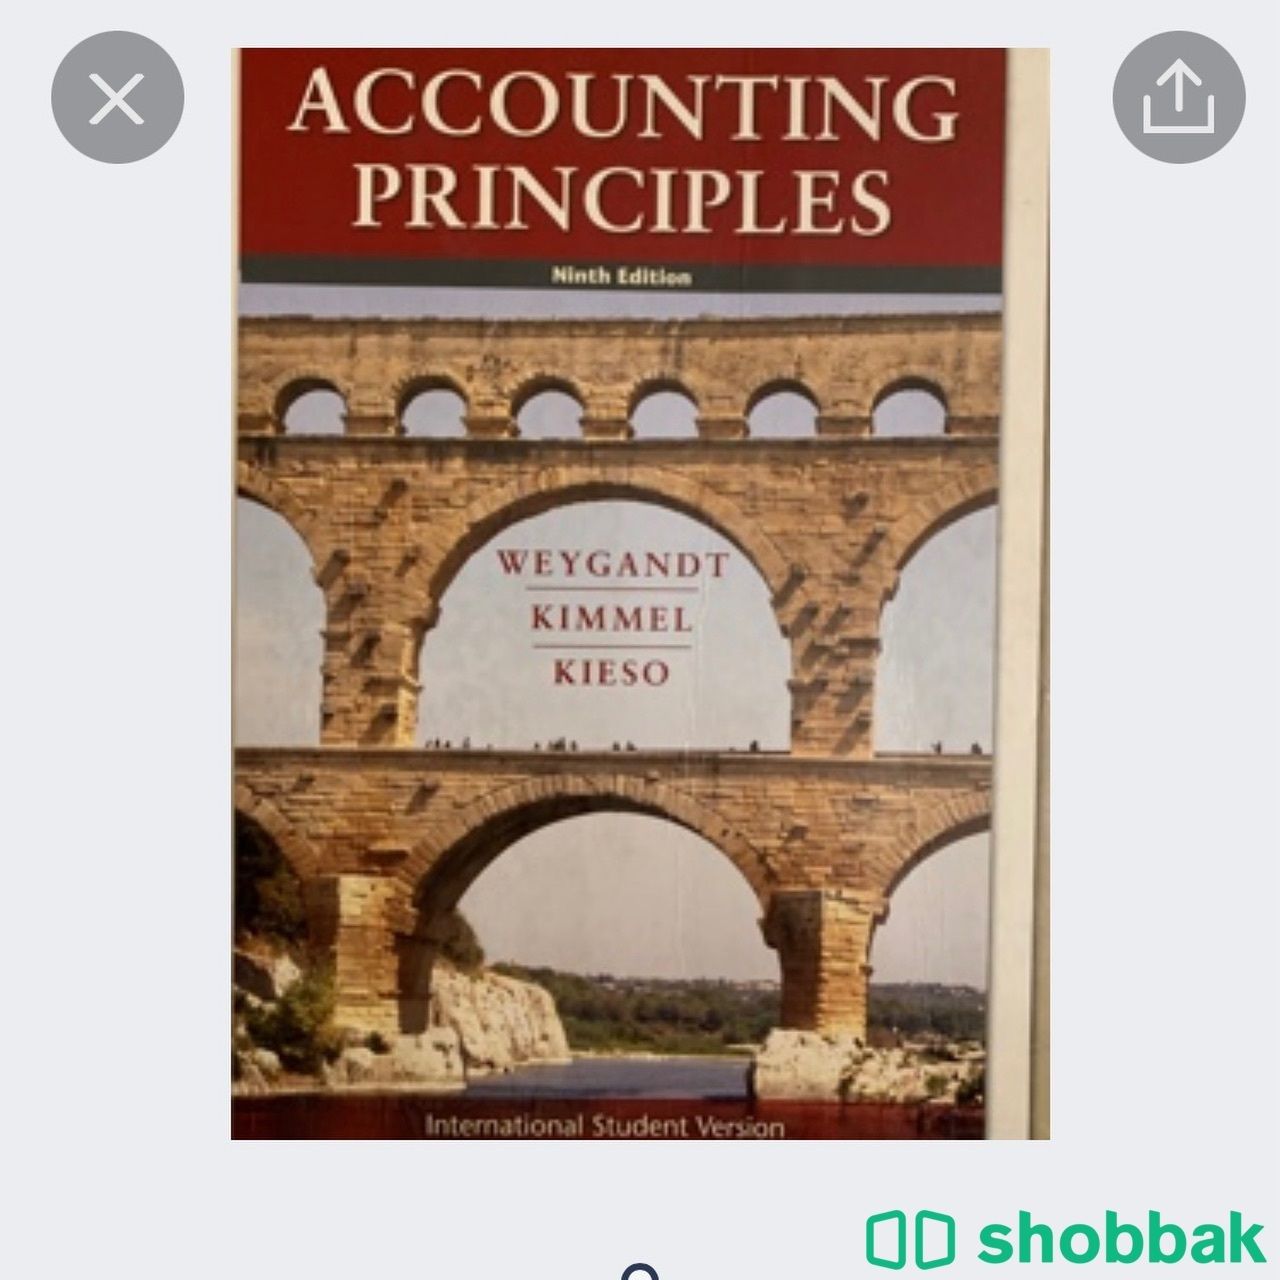 Accounting principles Shobbak Saudi Arabia